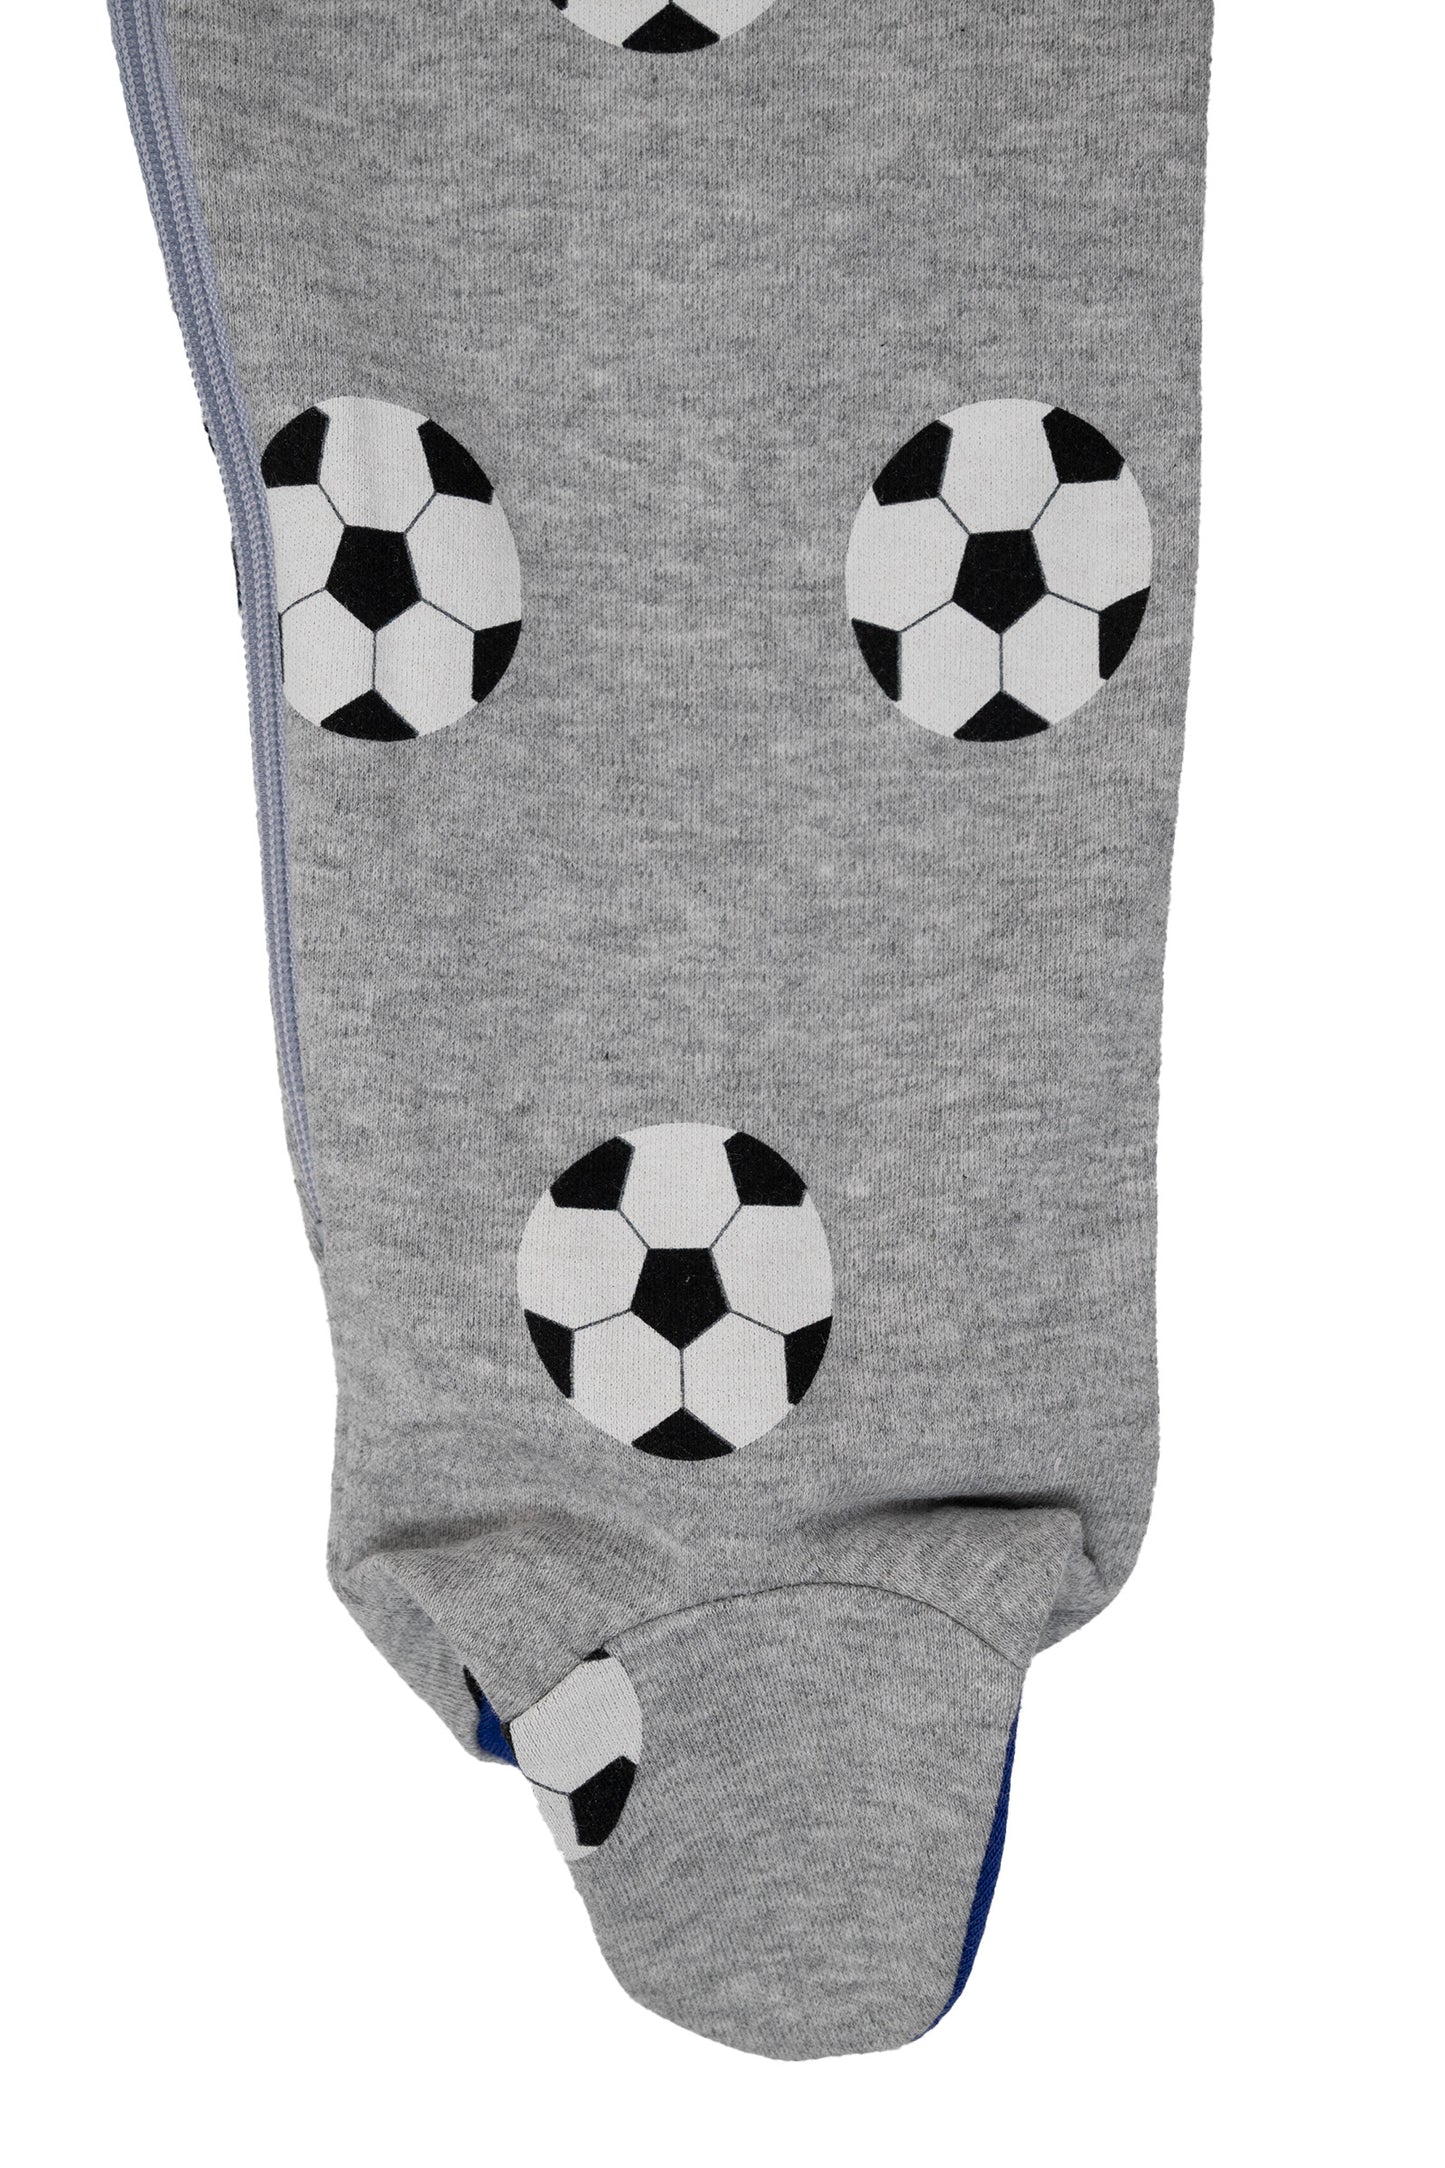 Baby 5-Piece Layette Soccer Sport Set